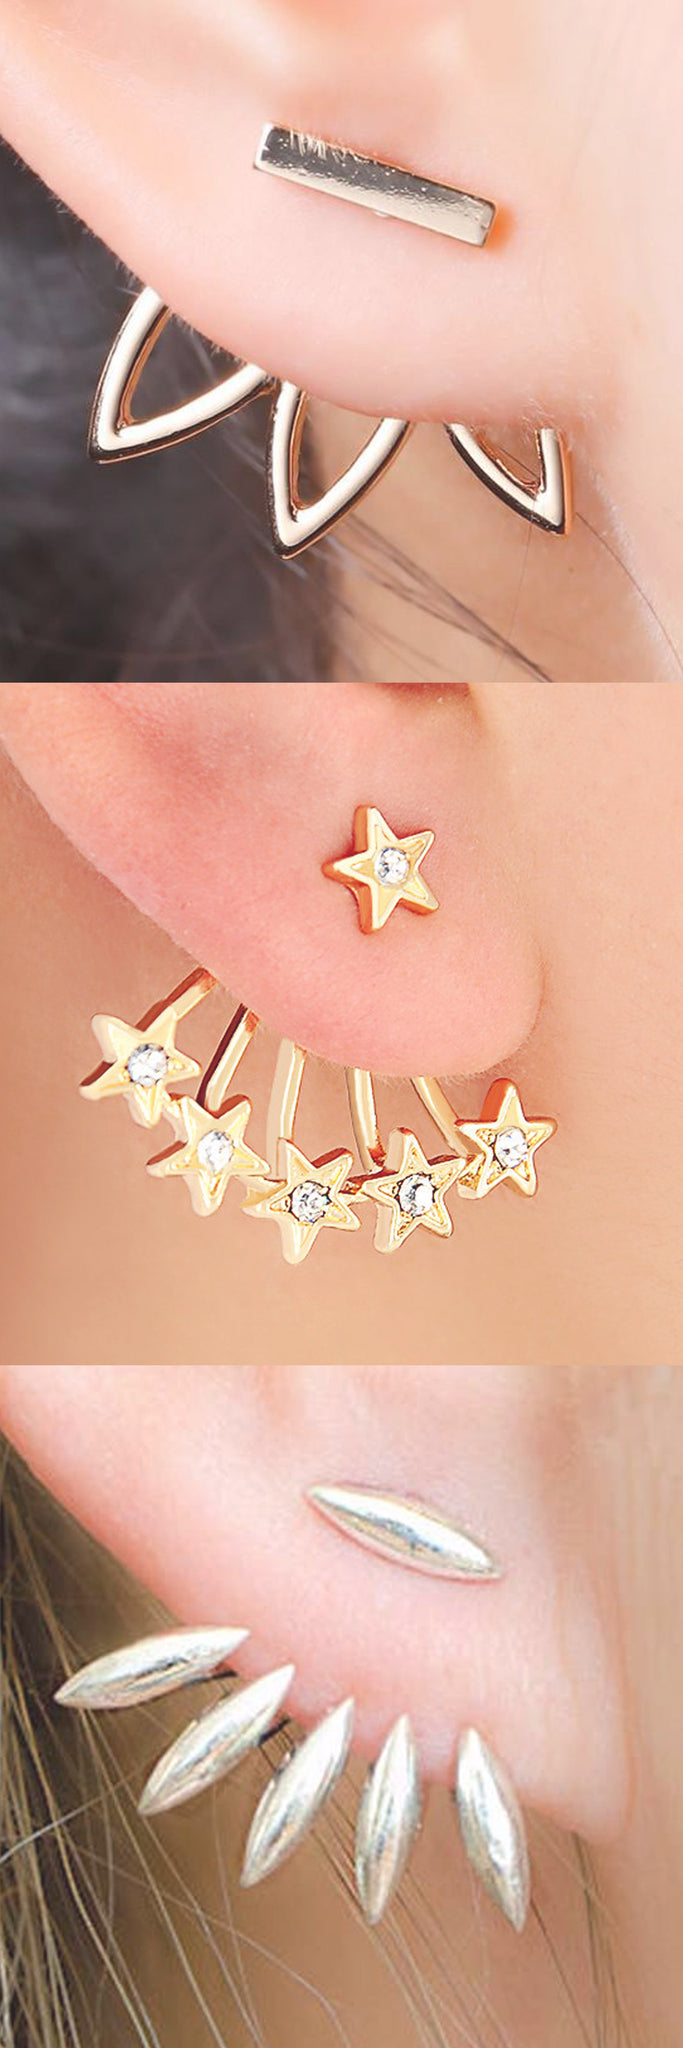 Celebrity Ear Piercing Ideas that are SOO Unique - Ear Jacket Earrings at MyBodiArt.com